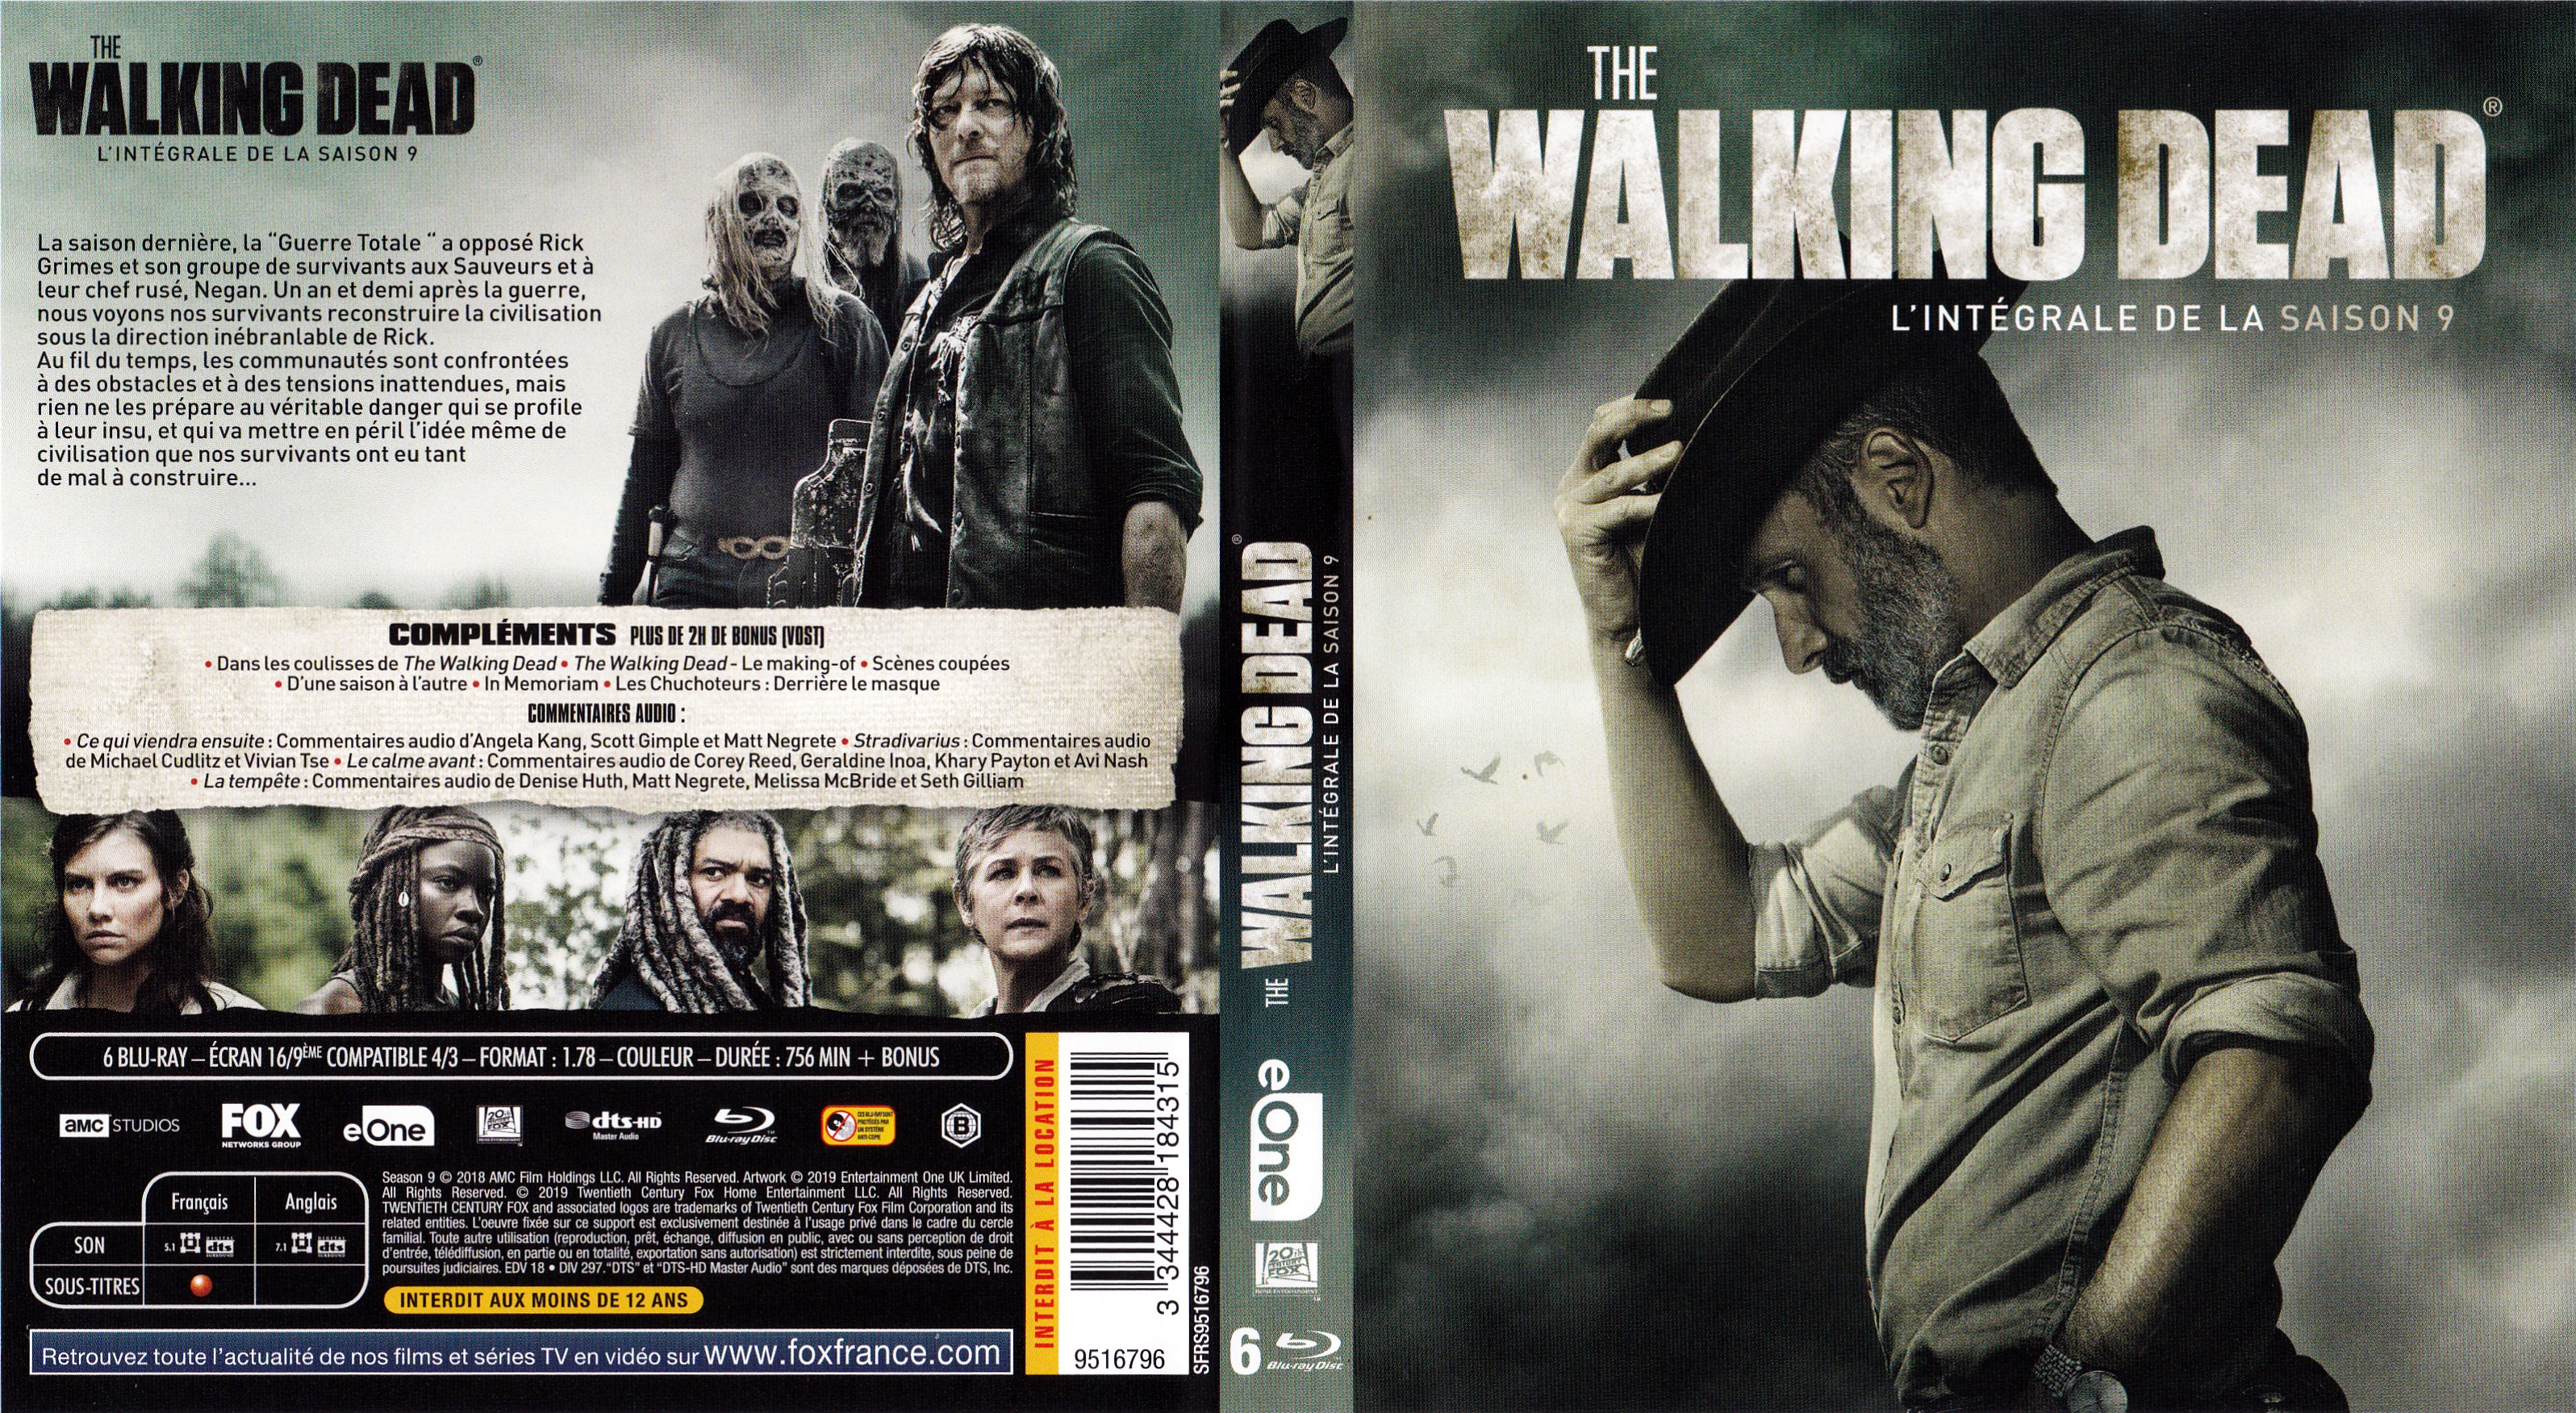 Jaquette DVD The Walking Dead saison 9 (BLU-RAY)